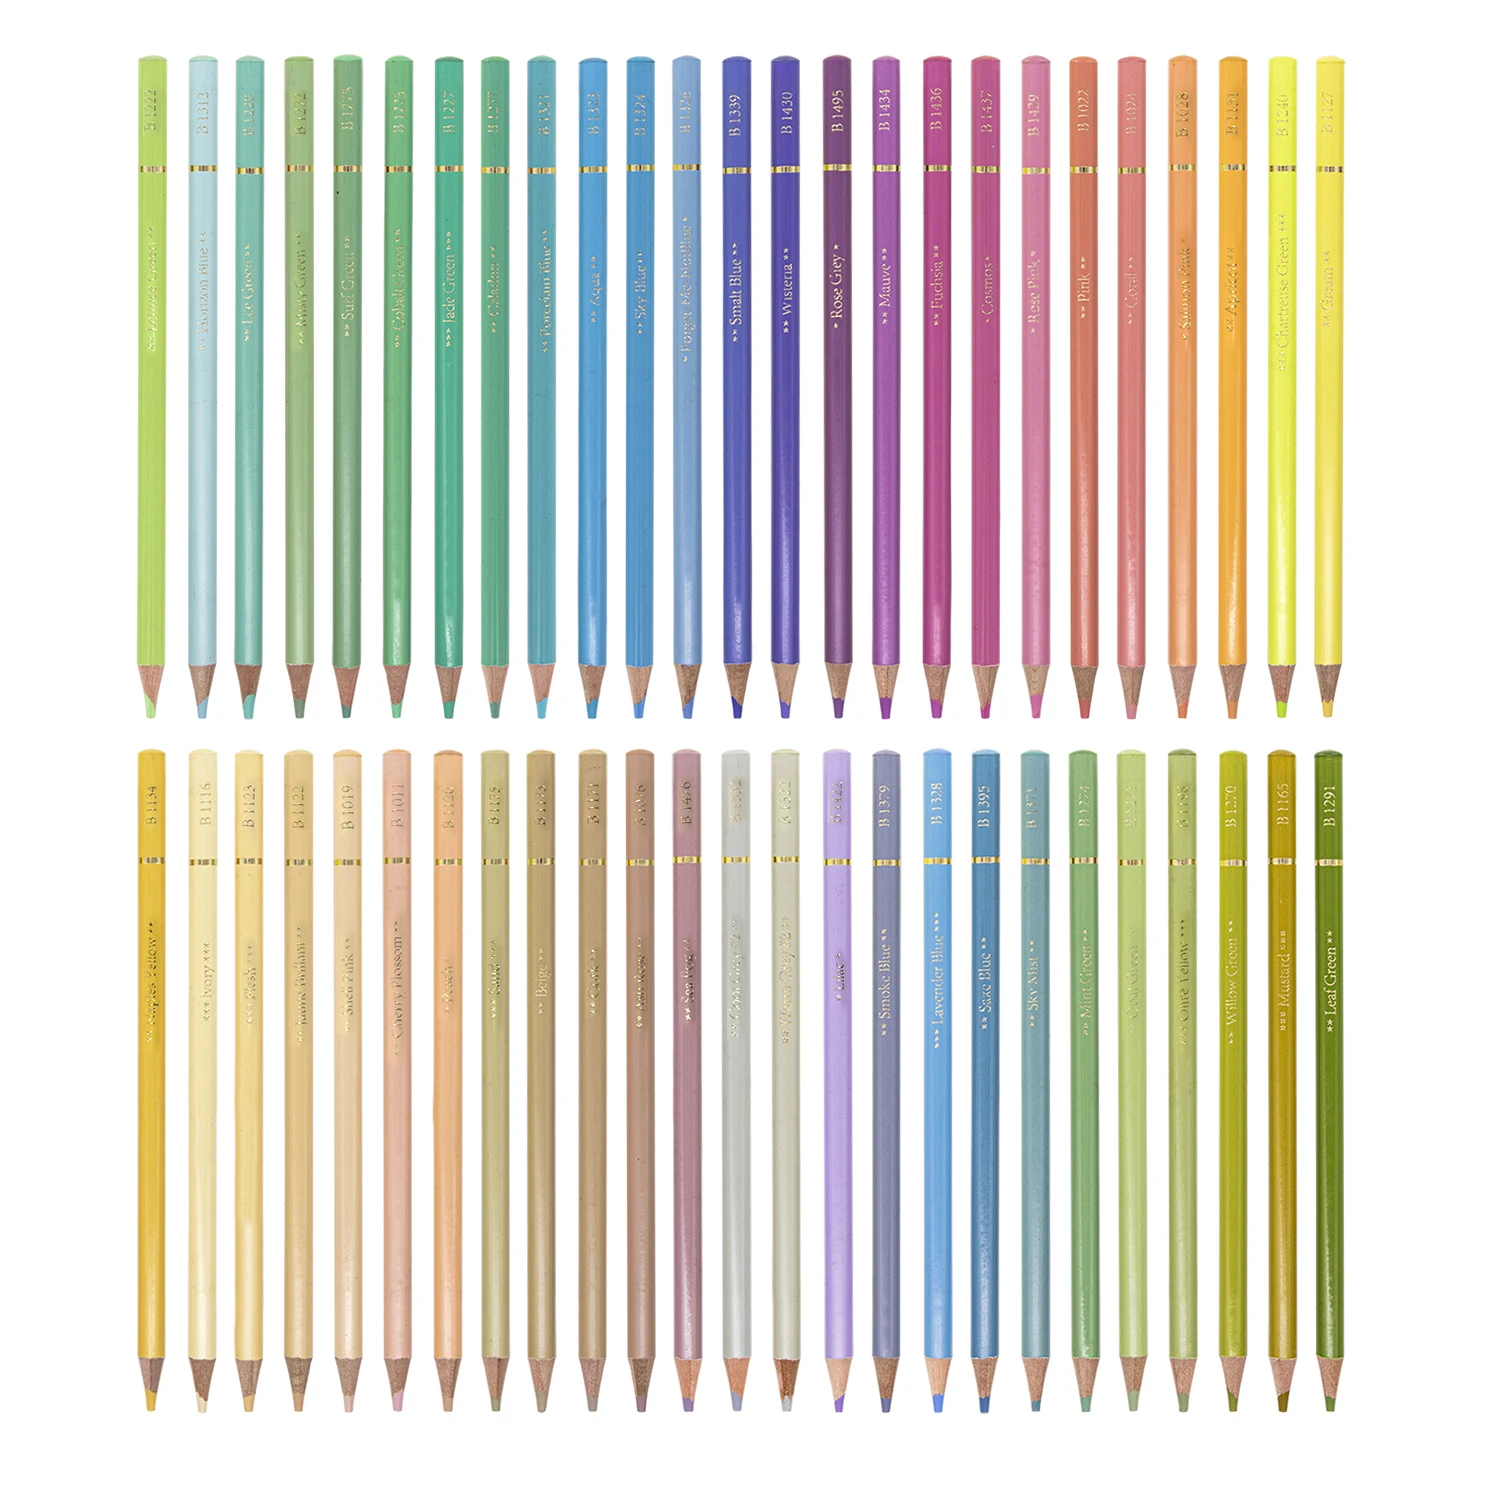 https://ae01.alicdn.com/kf/H626790c2f30e4c30b8e3388532fb4a4fr/Brutfuner-12-50-72-Colors-Macaron-Pastel-Colored-Pencils-Sketch-Drawing-Set-Oil-Pencil-Pencil-For.jpg